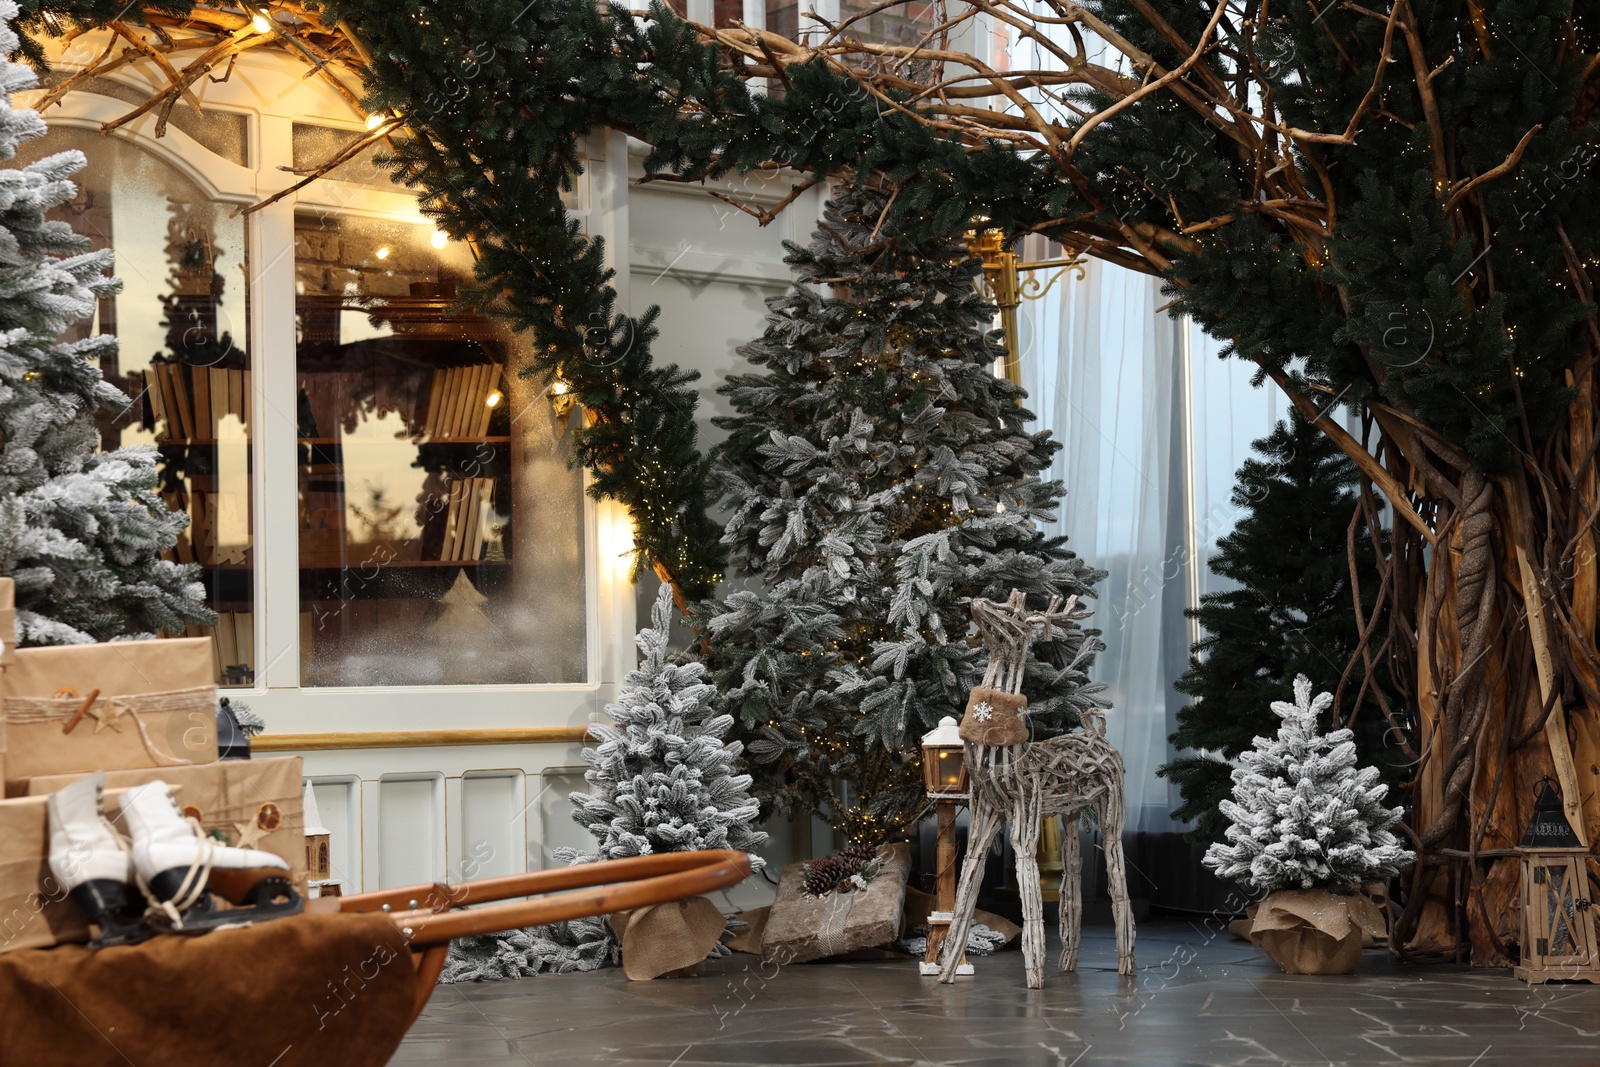 Photo of Beautiful Christmas trees, many gift boxes, skates and festive decor indoors. Interior design